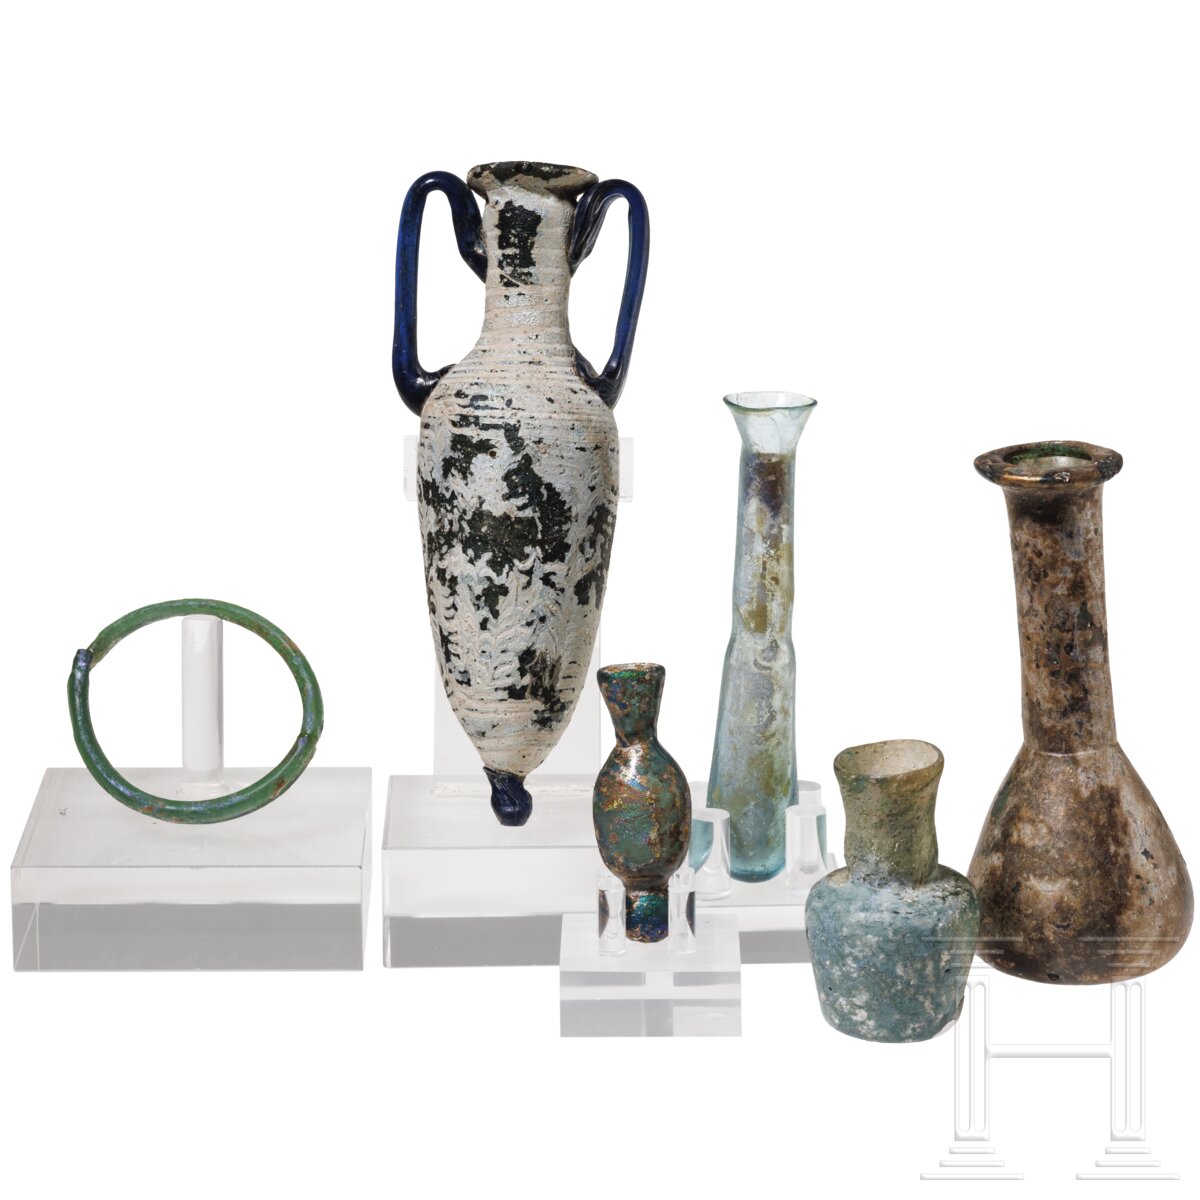 Fünf antike Glasgefäße und ein Glasarmreif, 2. Jhdt. v. Chr. - 6. Jhdt. n. Chr.